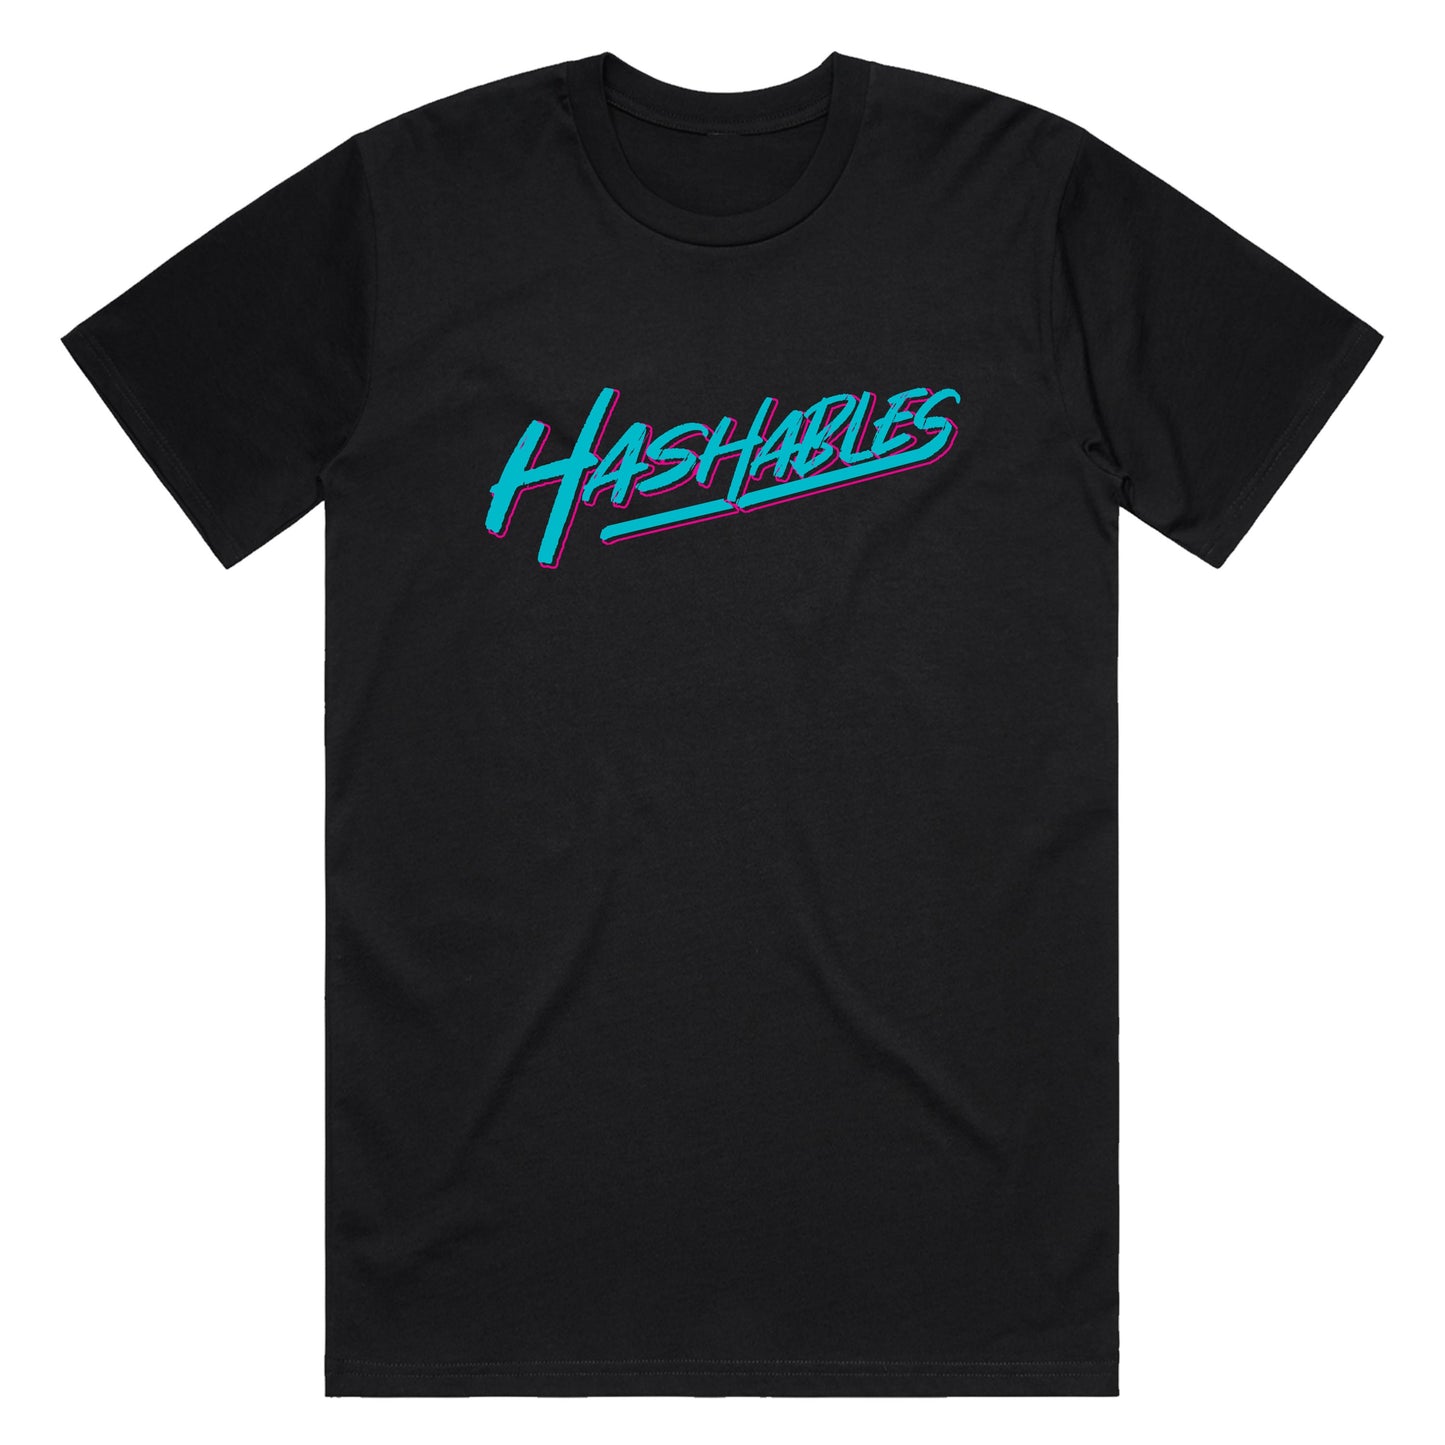 Hashables - Taste the Rush - T-Shirt